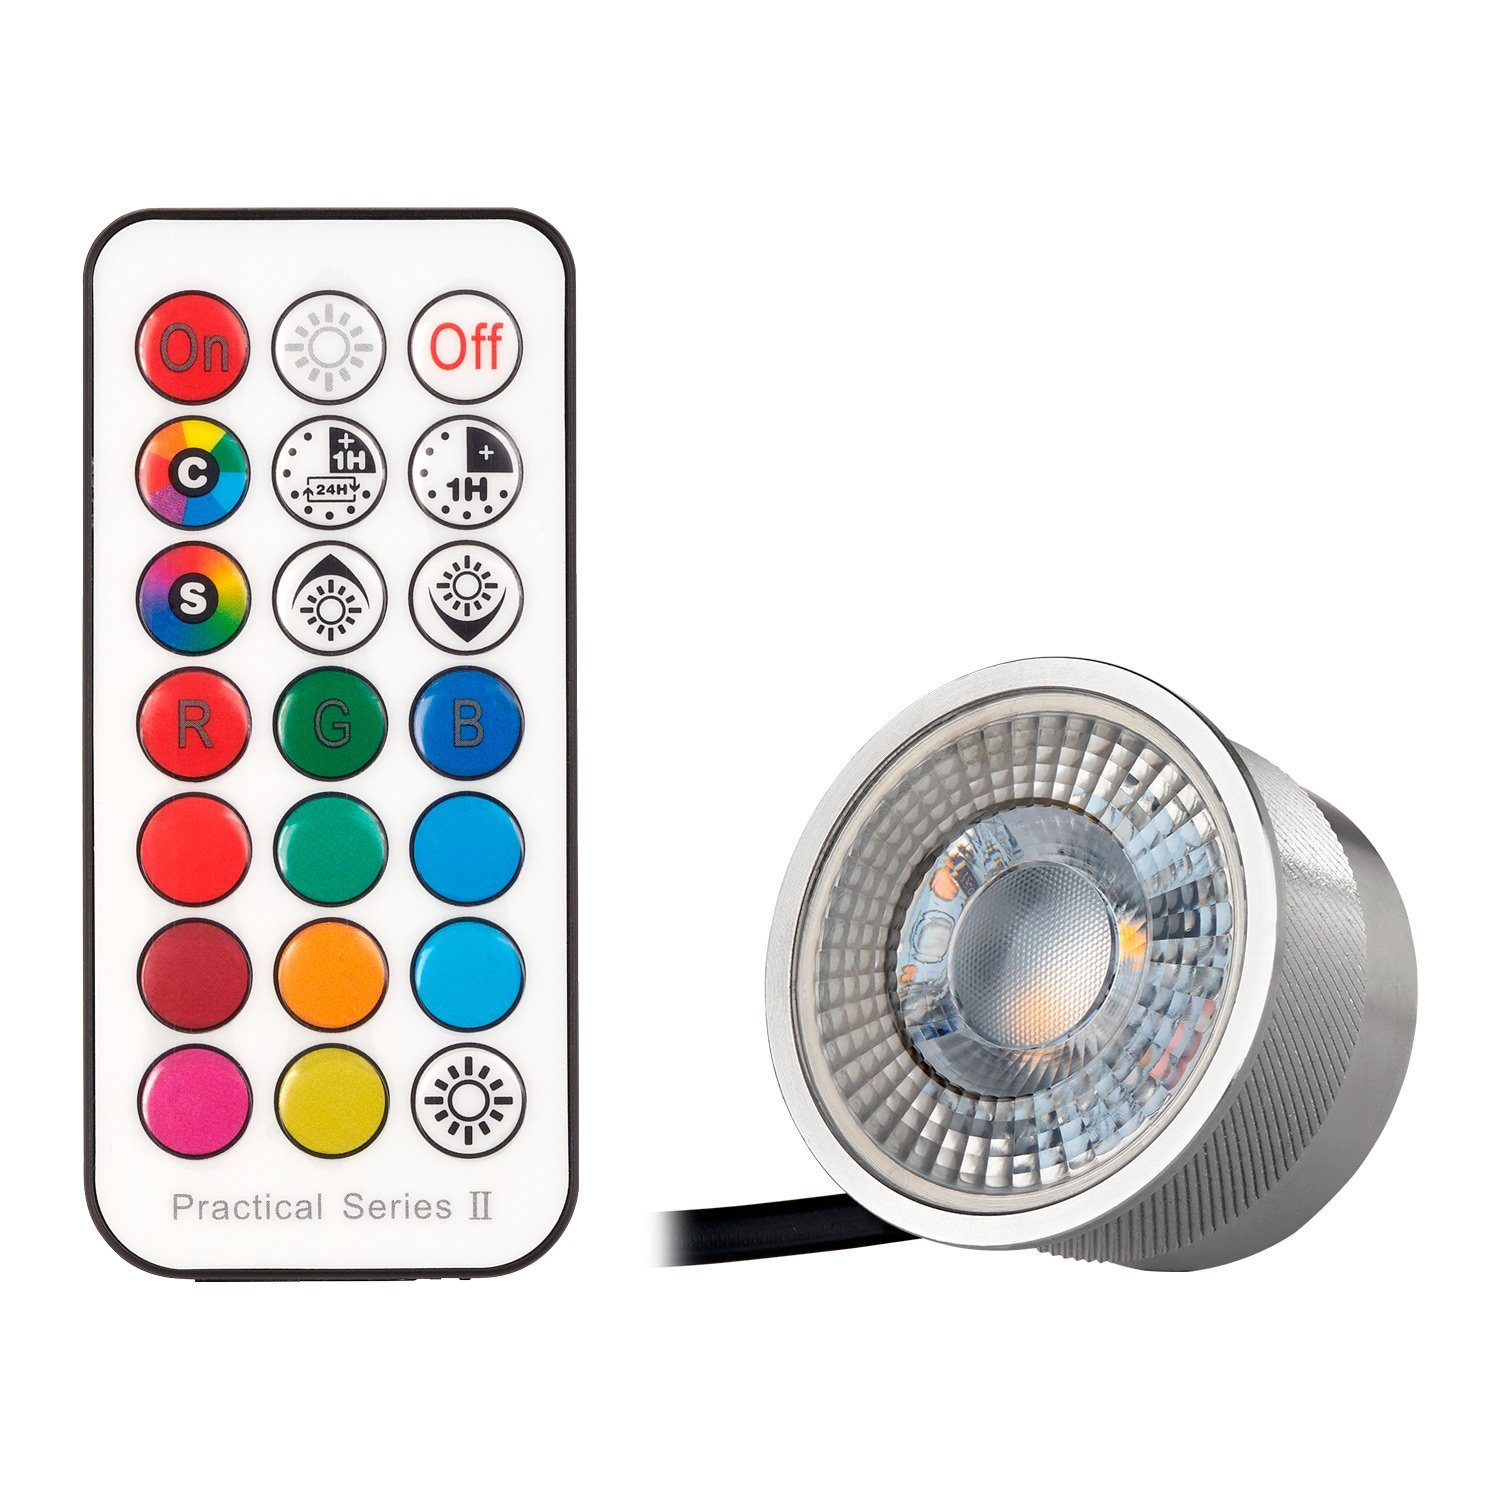 mi - Einbaustrahler Einbaustrahler bicolor 10er extra in LEDANDO zweifarbig flach LED LED Set RGB